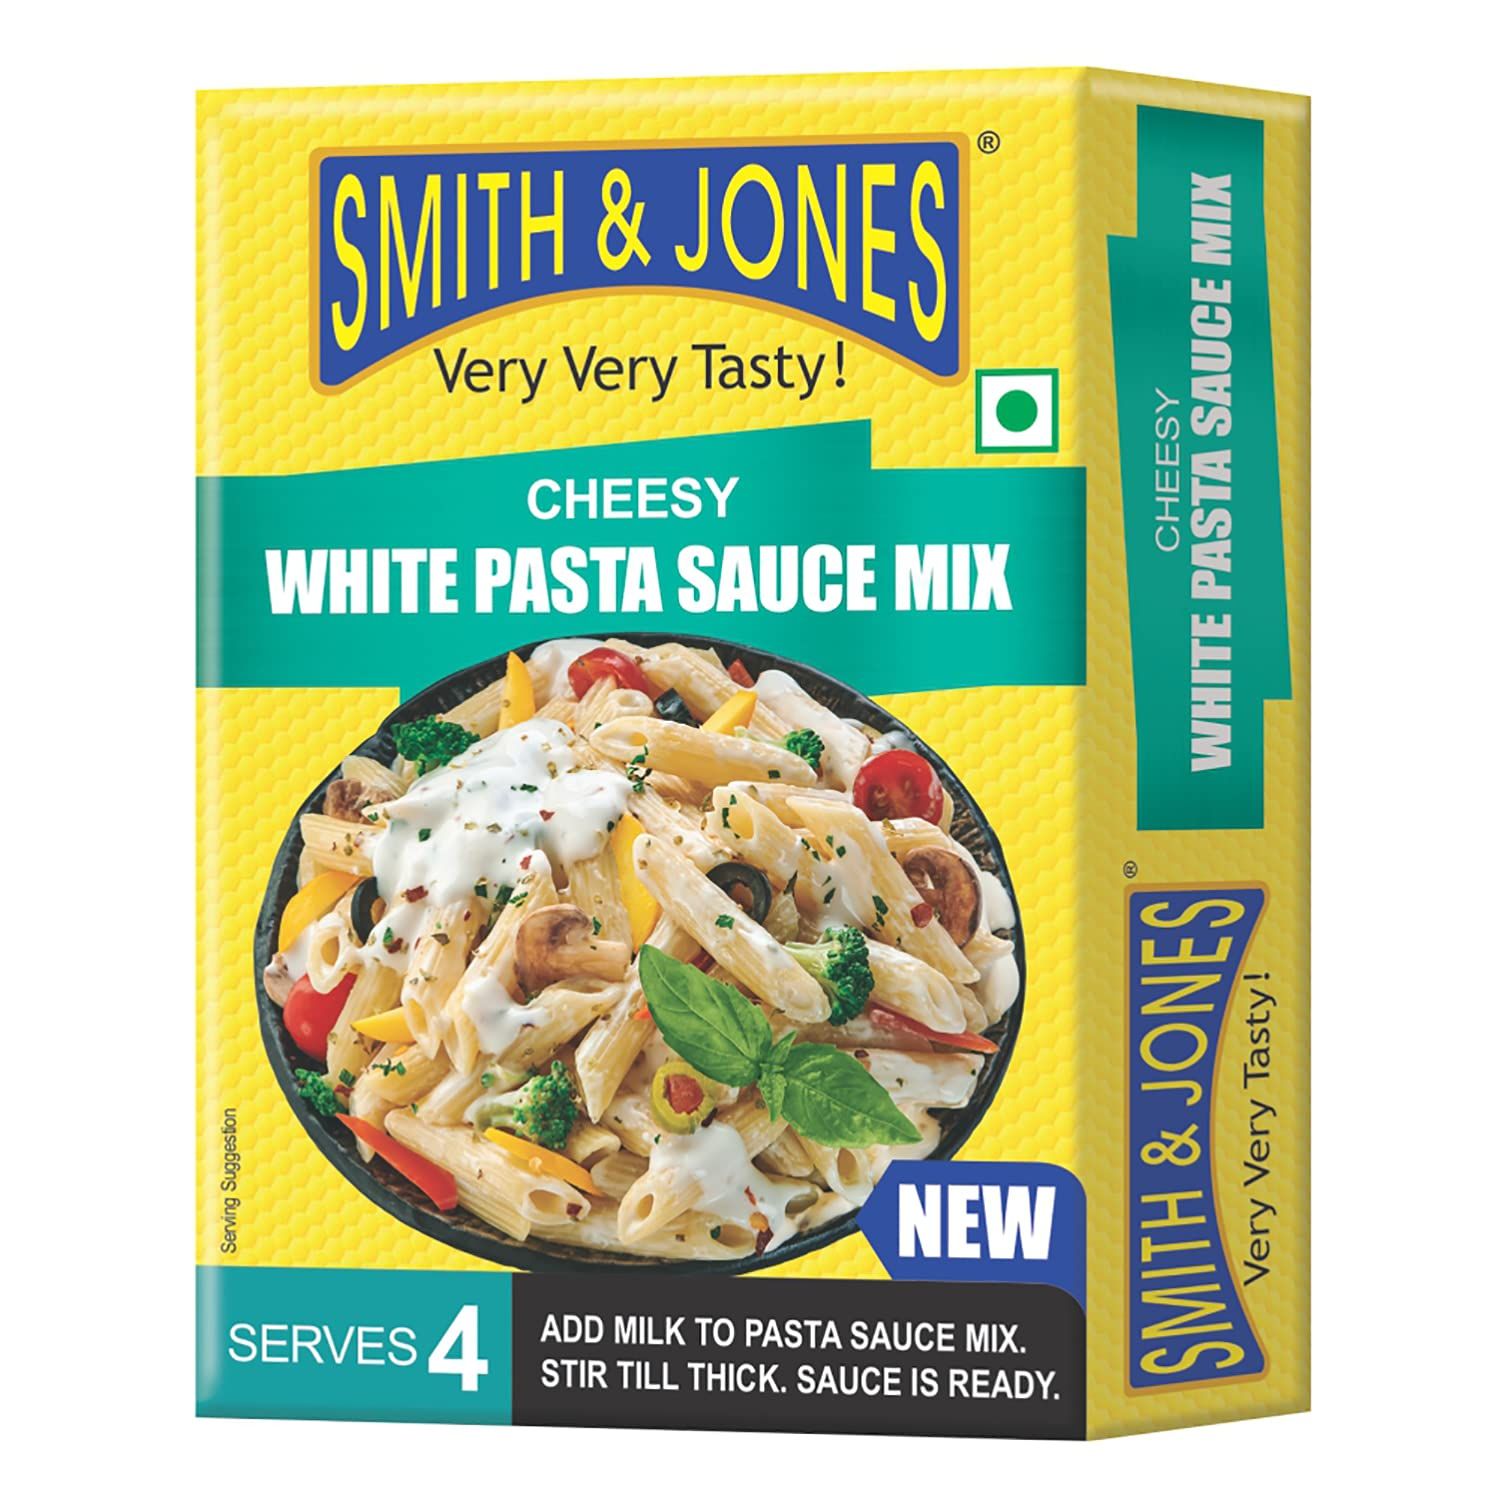 Smith & Jones White Pasta Sauce Image